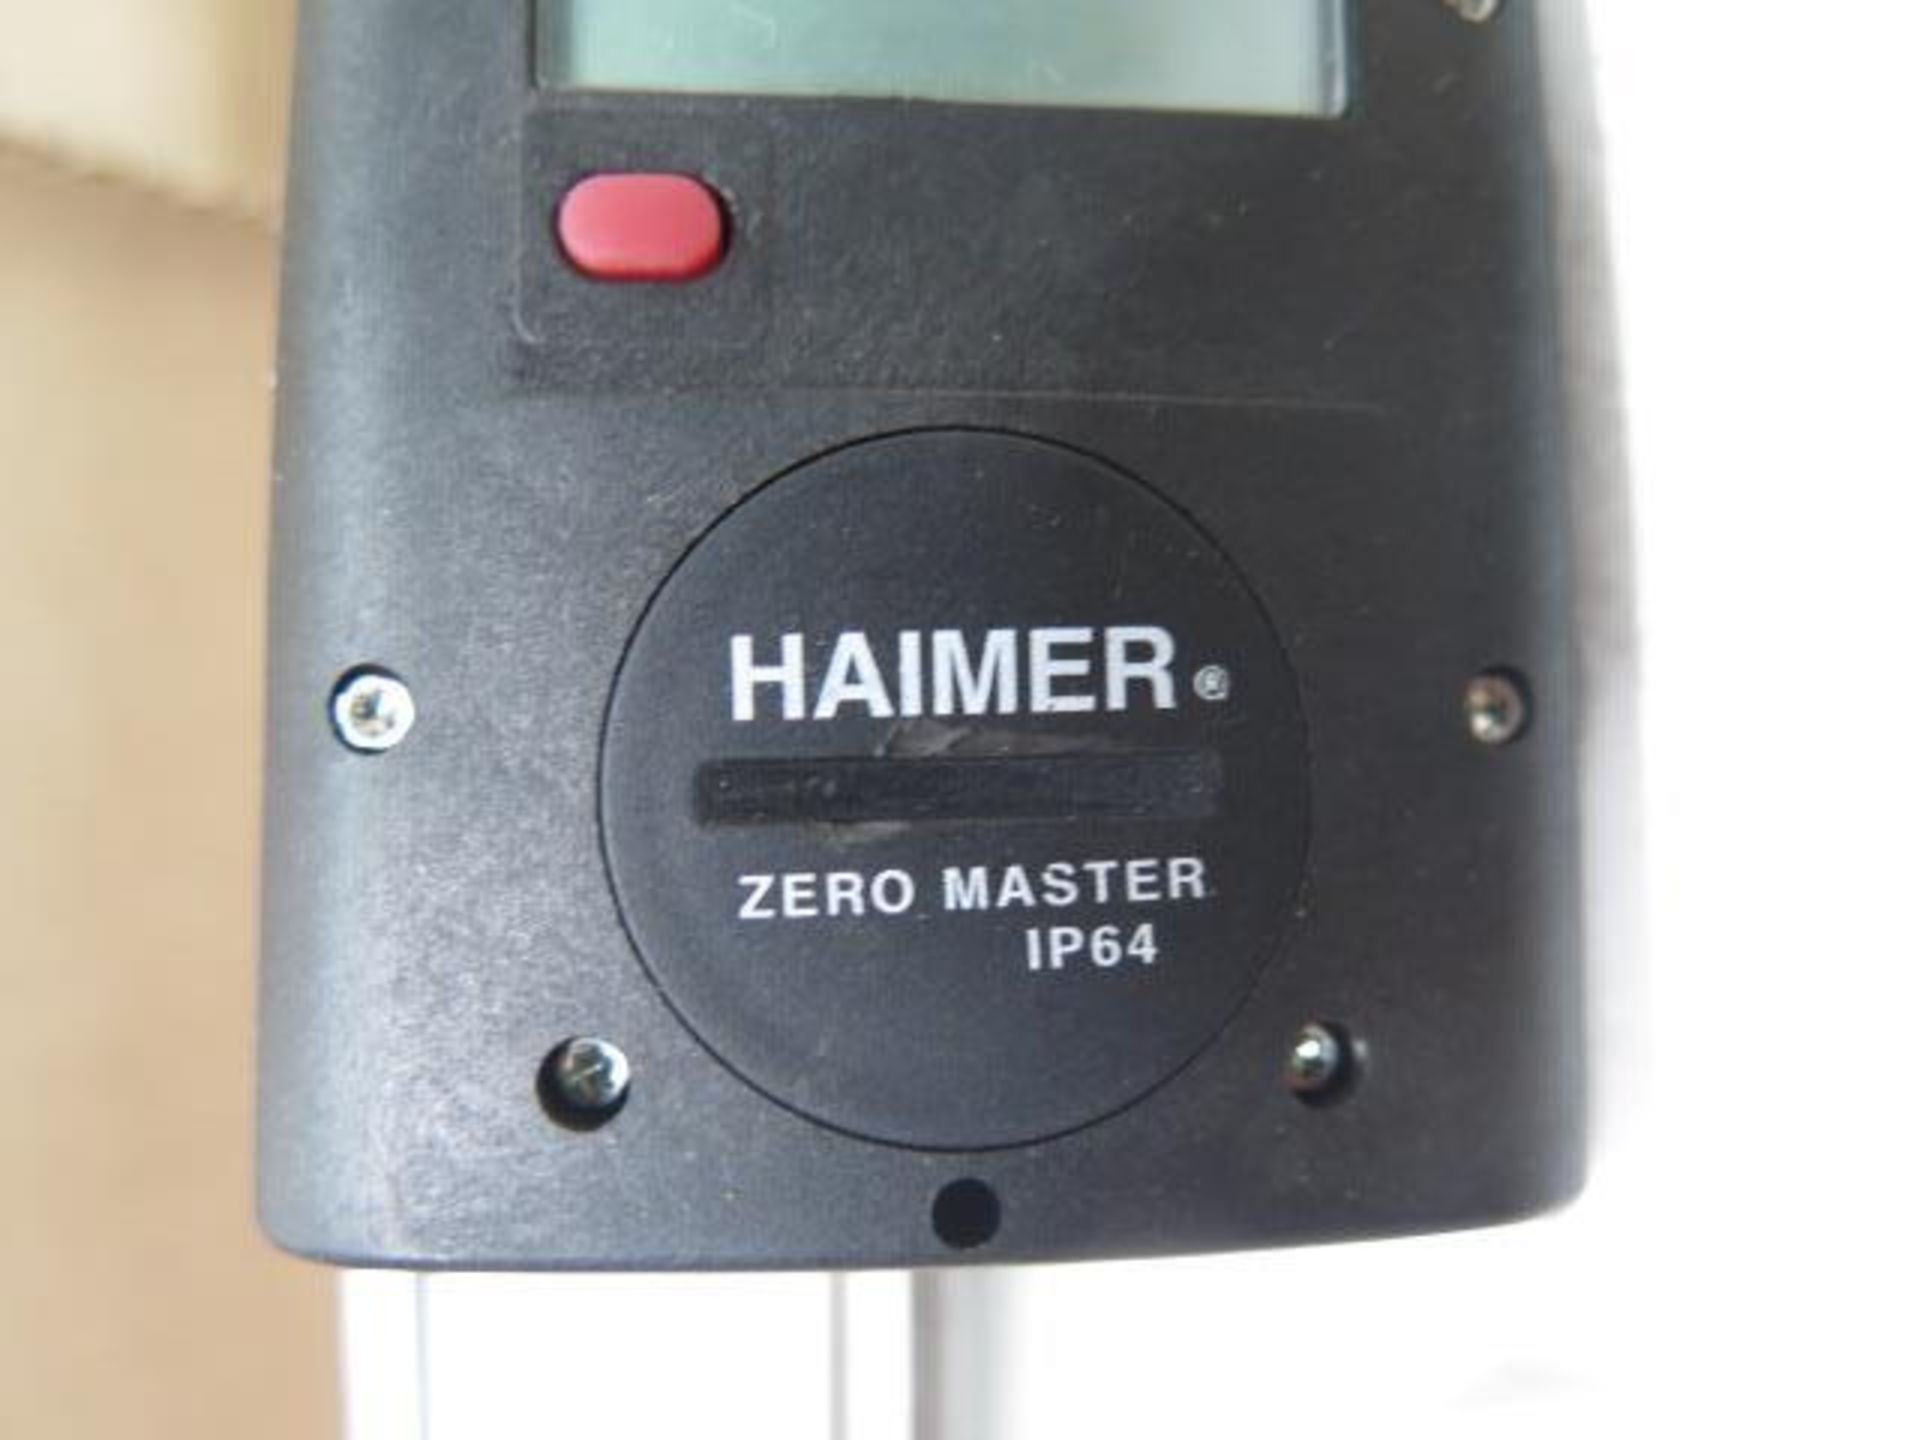 Haimer "Zero Master" IP64 Digital Edge Finder (SOLD AS-IS - NO WARRANTY) - Image 4 of 4